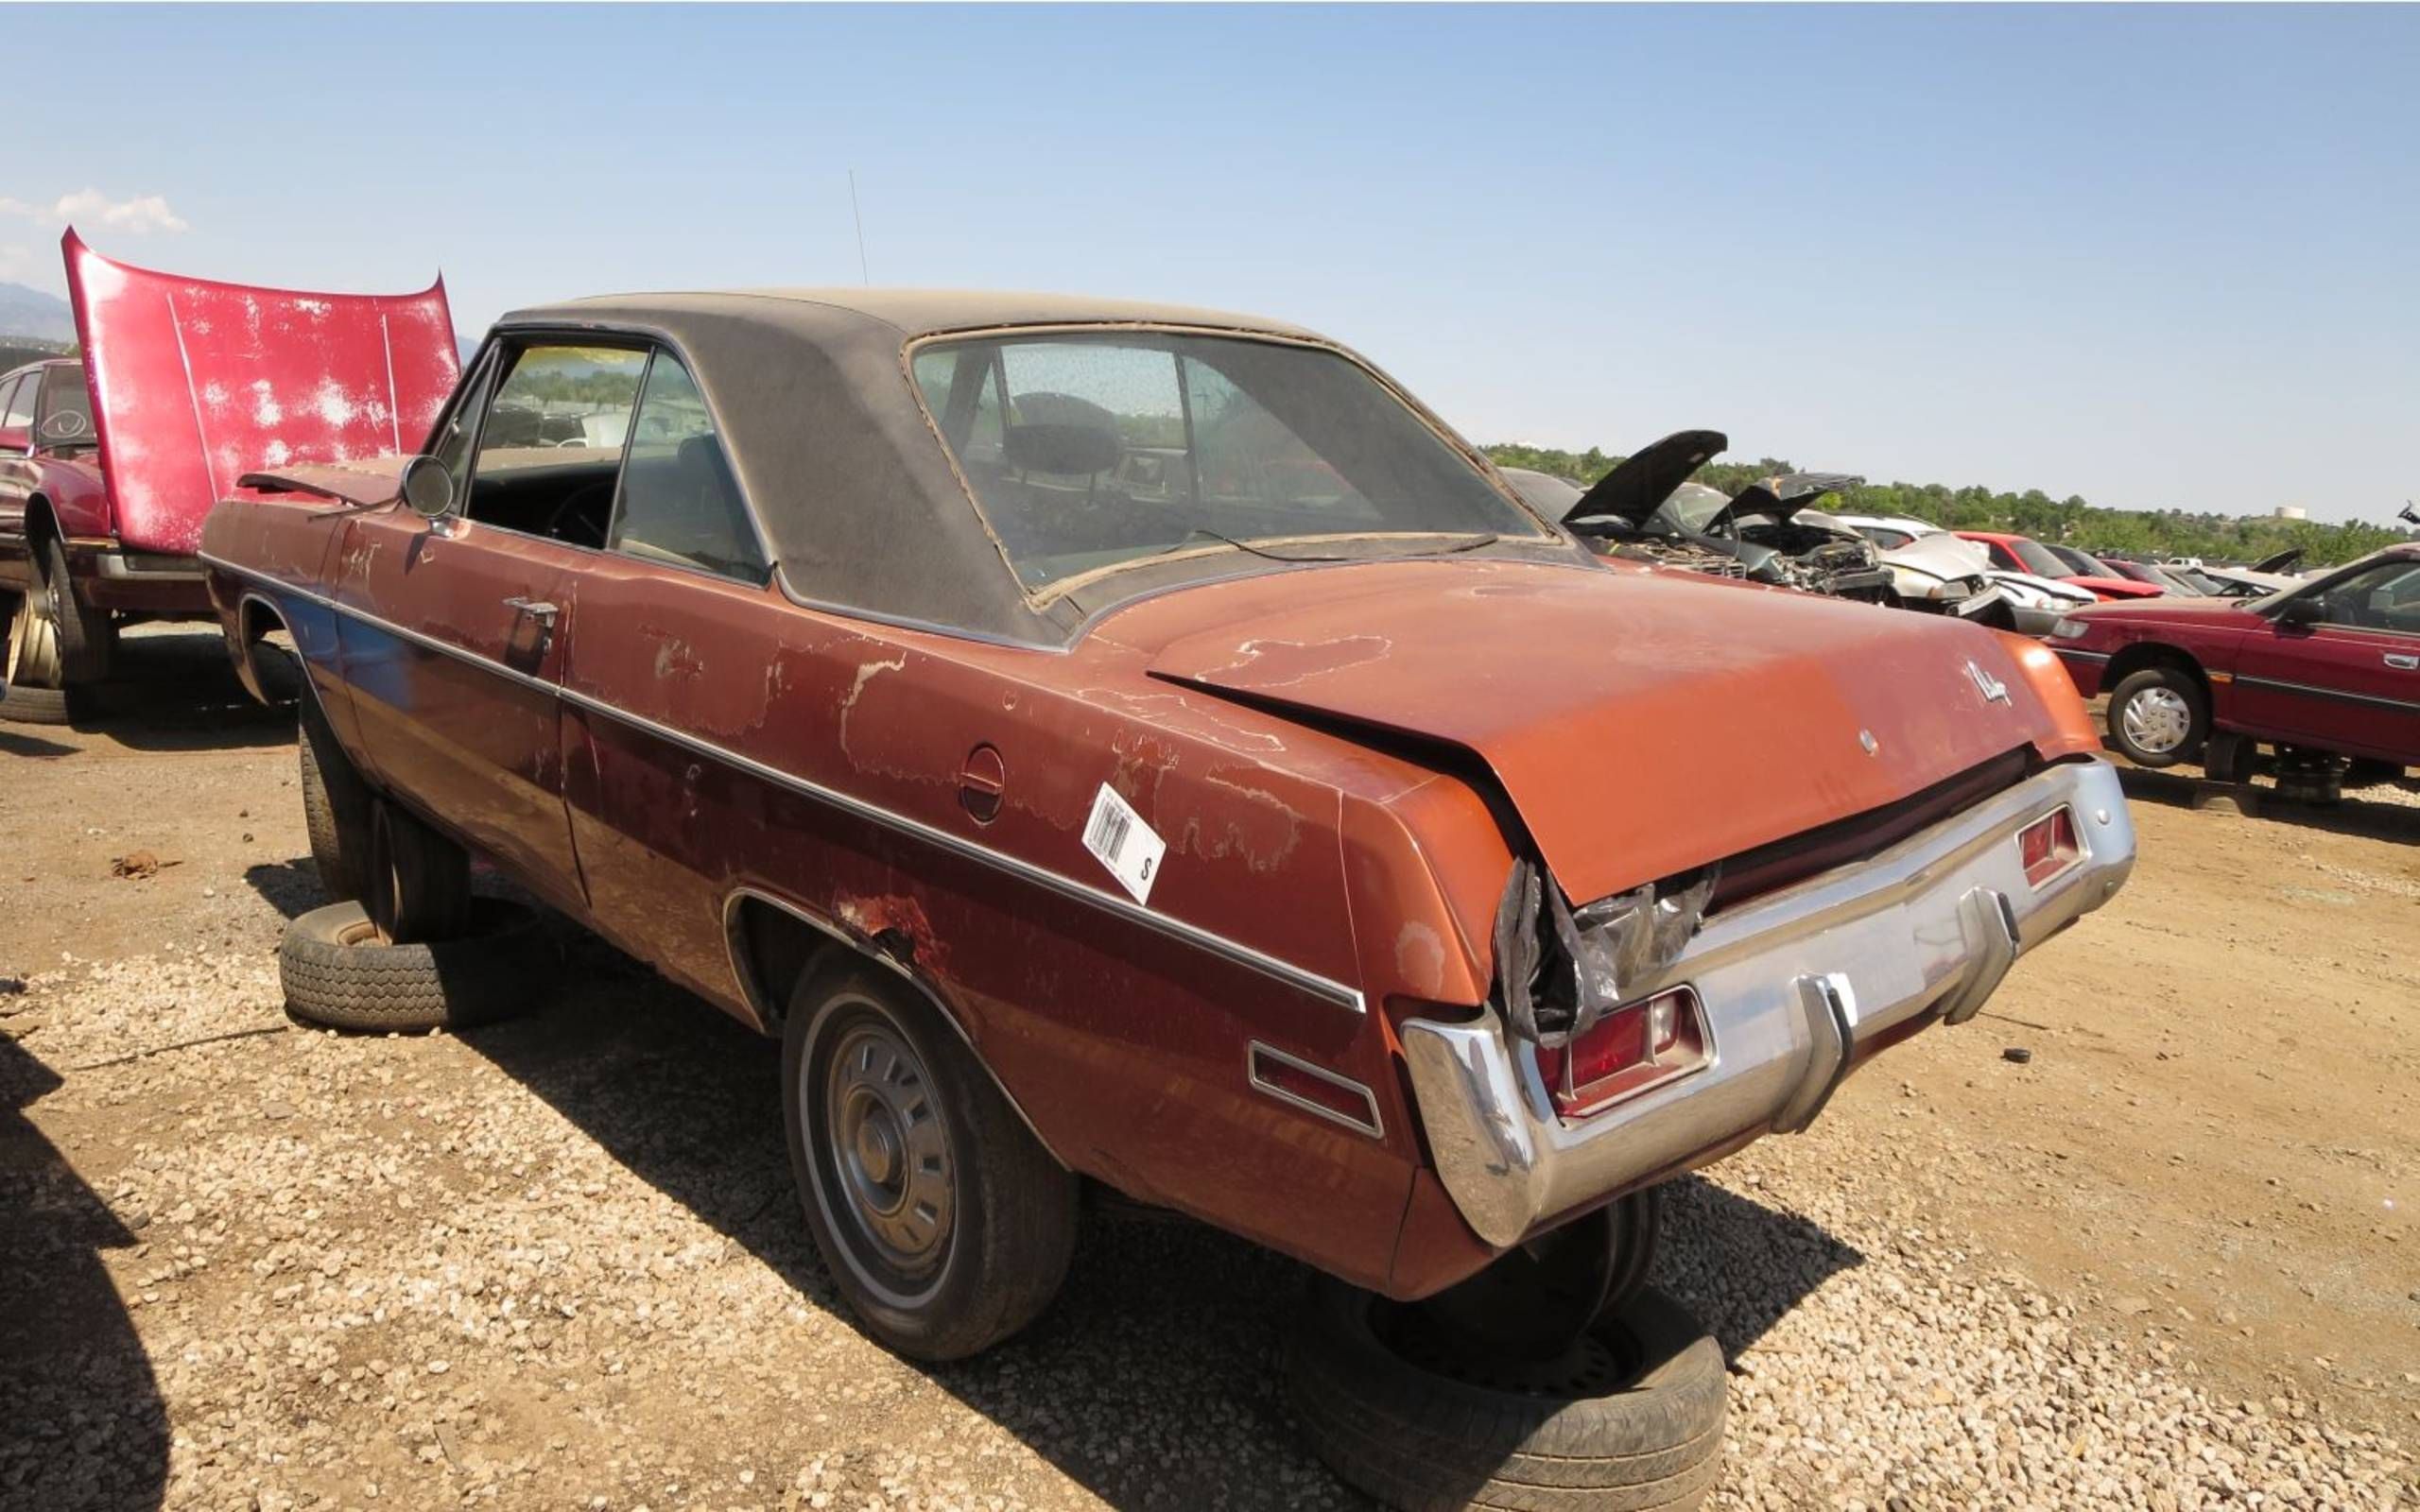 Junked 1970 Dodge Dart Swinger in Colorado wrecking yard